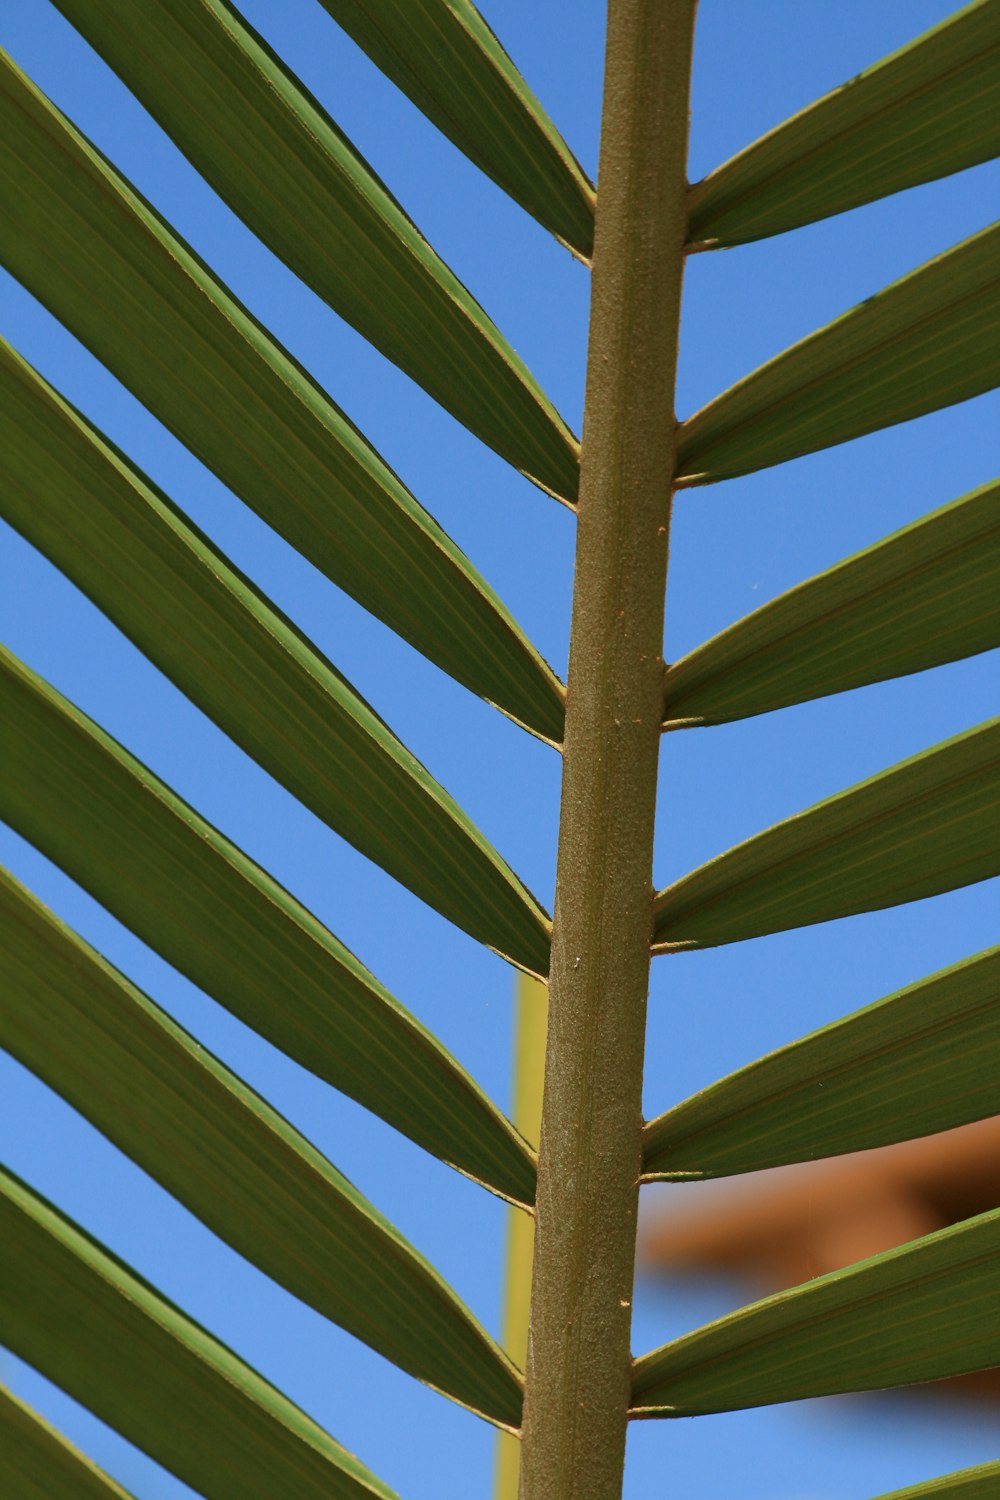 a close up of a palm leaf against a blue sky